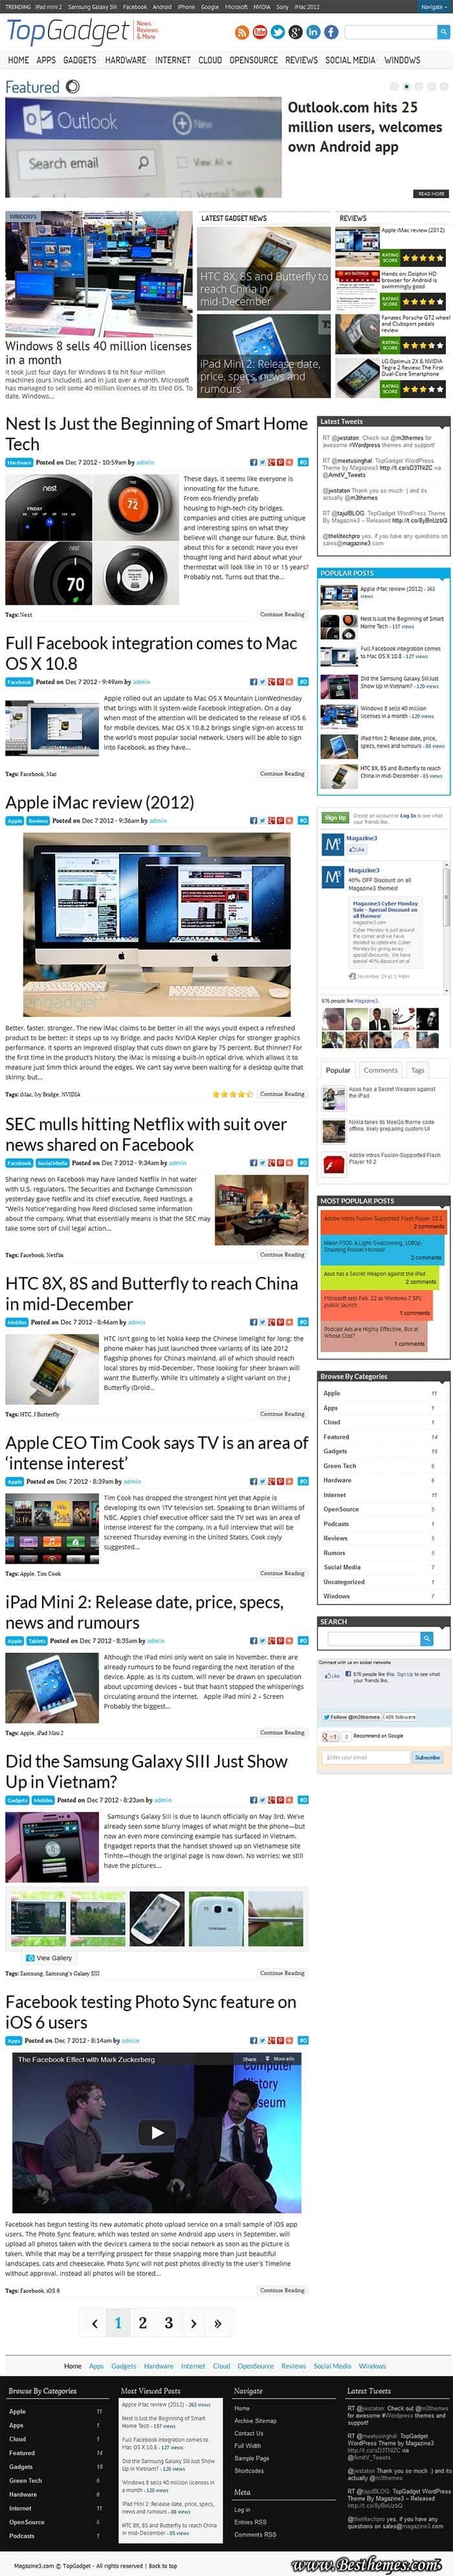 TopGadget WordPress Theme,Gadget news WP Theme,Tech News WP Template, Technology Magazine WordPress Theme,Get full content exposure